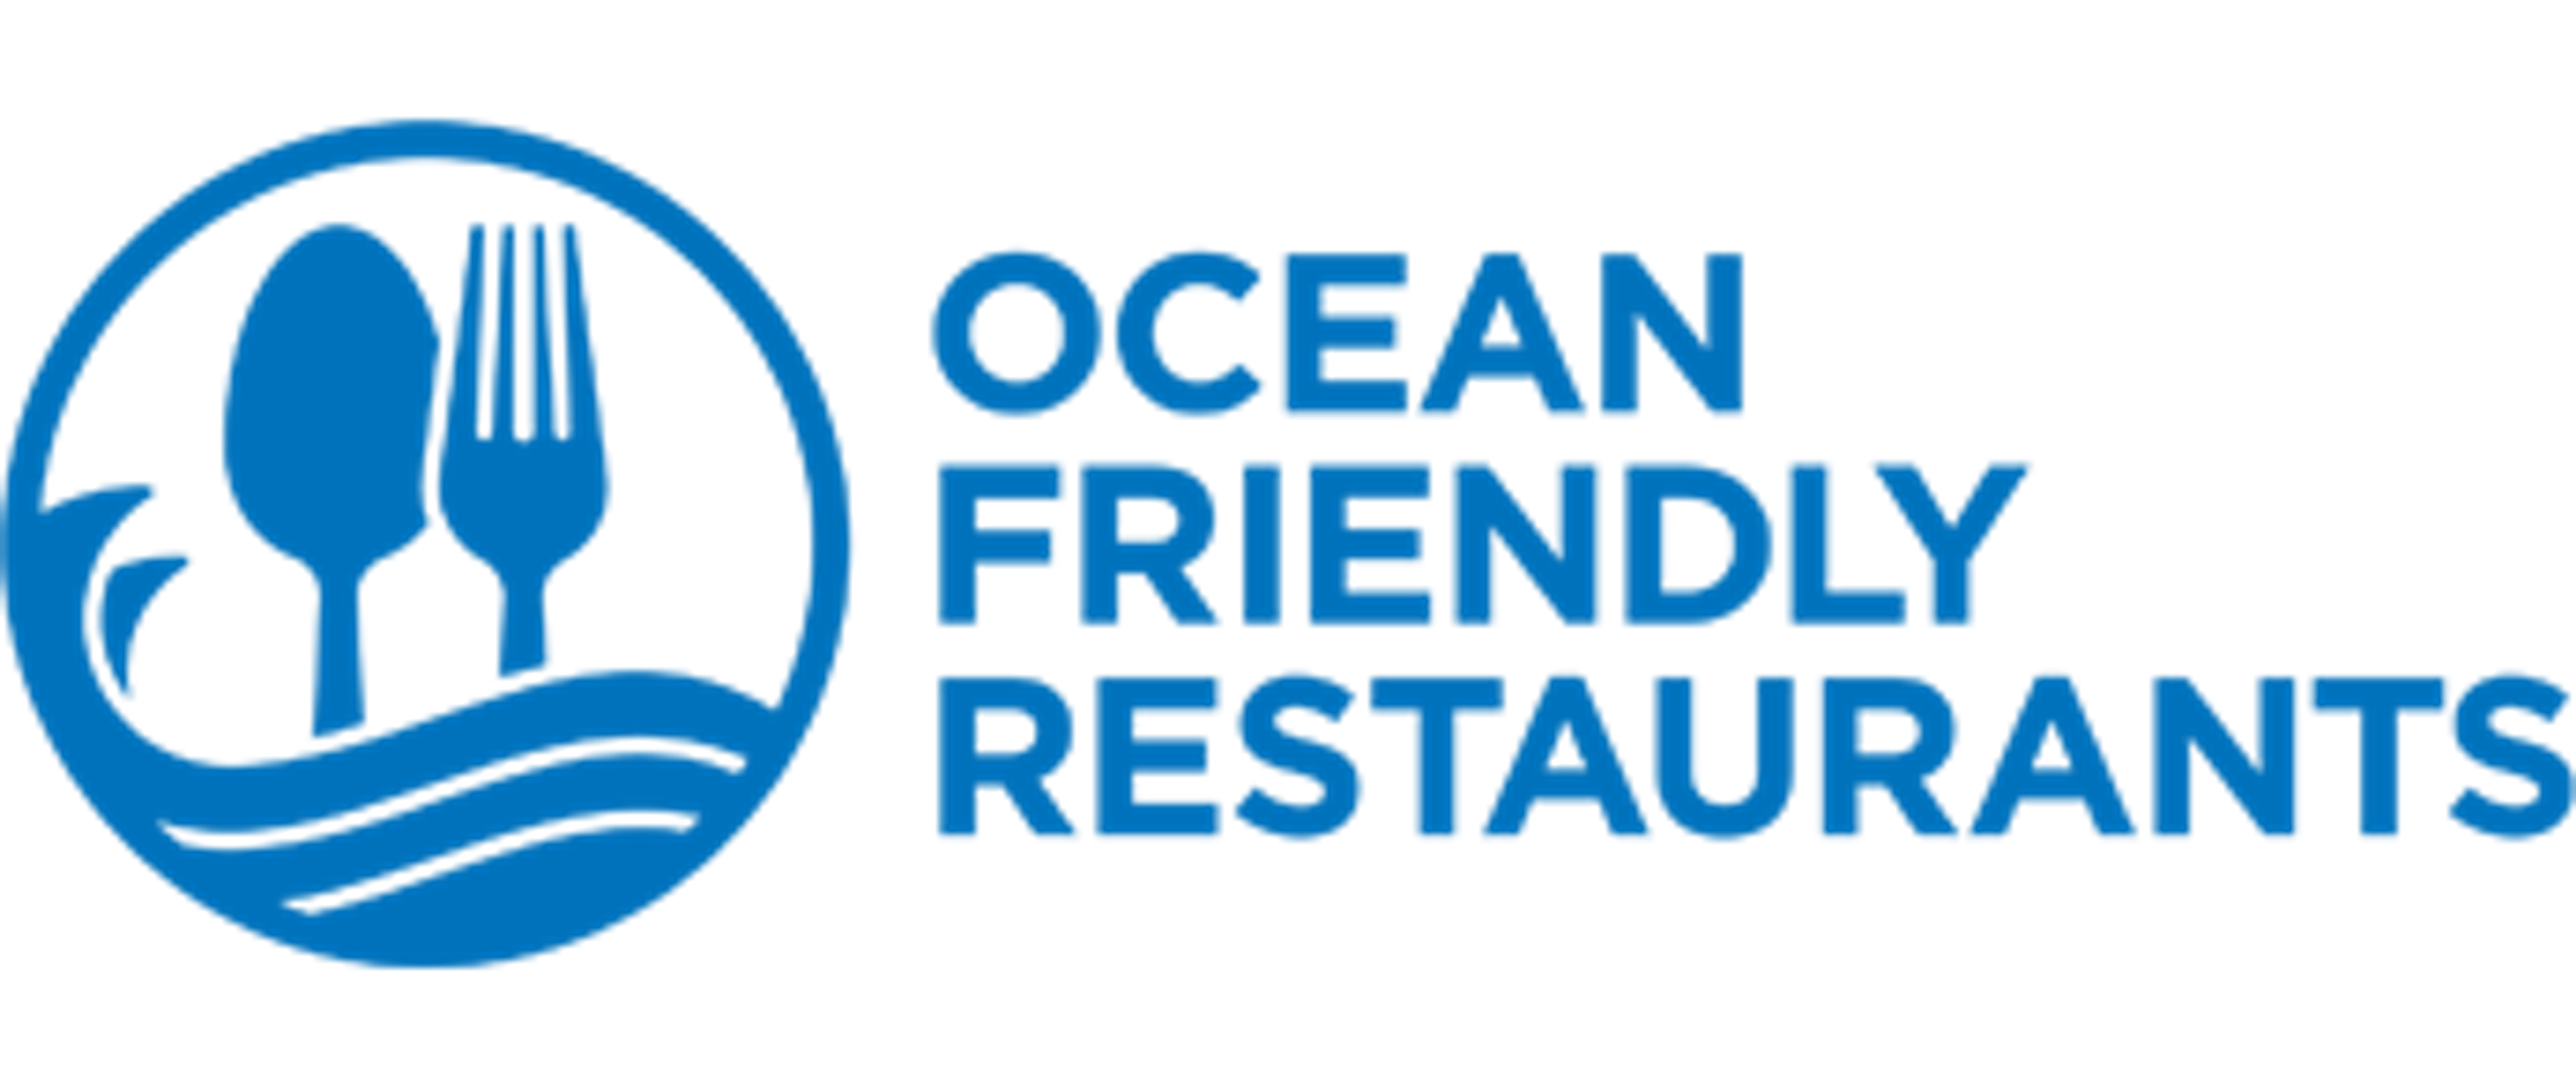 Ocean Friendly Restaurants logo.